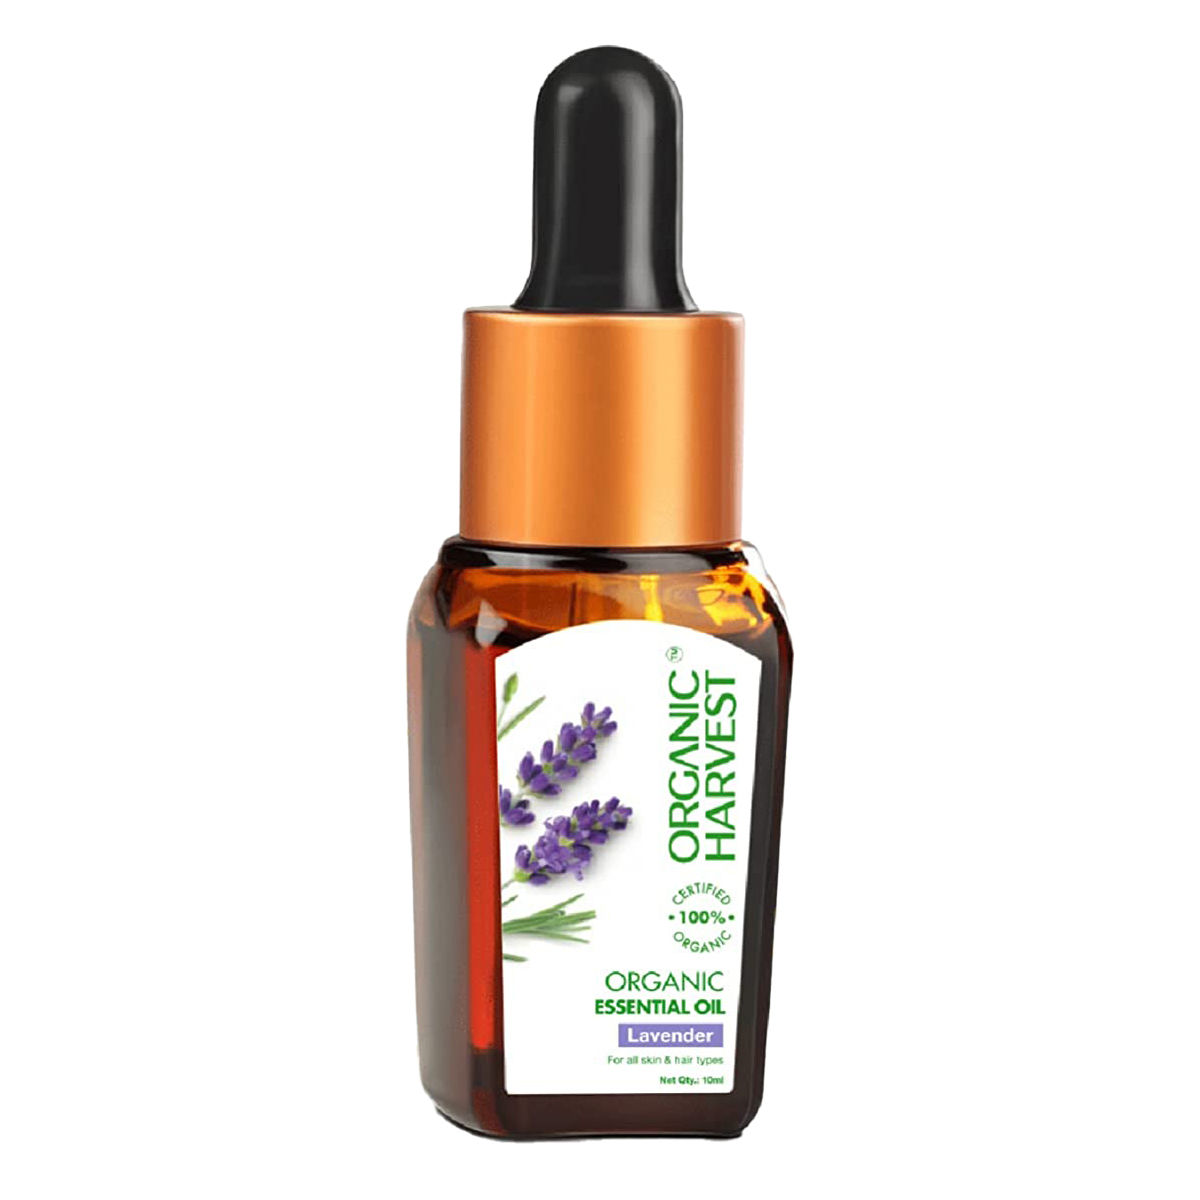 Buy Organic Harvest Lavender Essential Oil, 10 ml Online